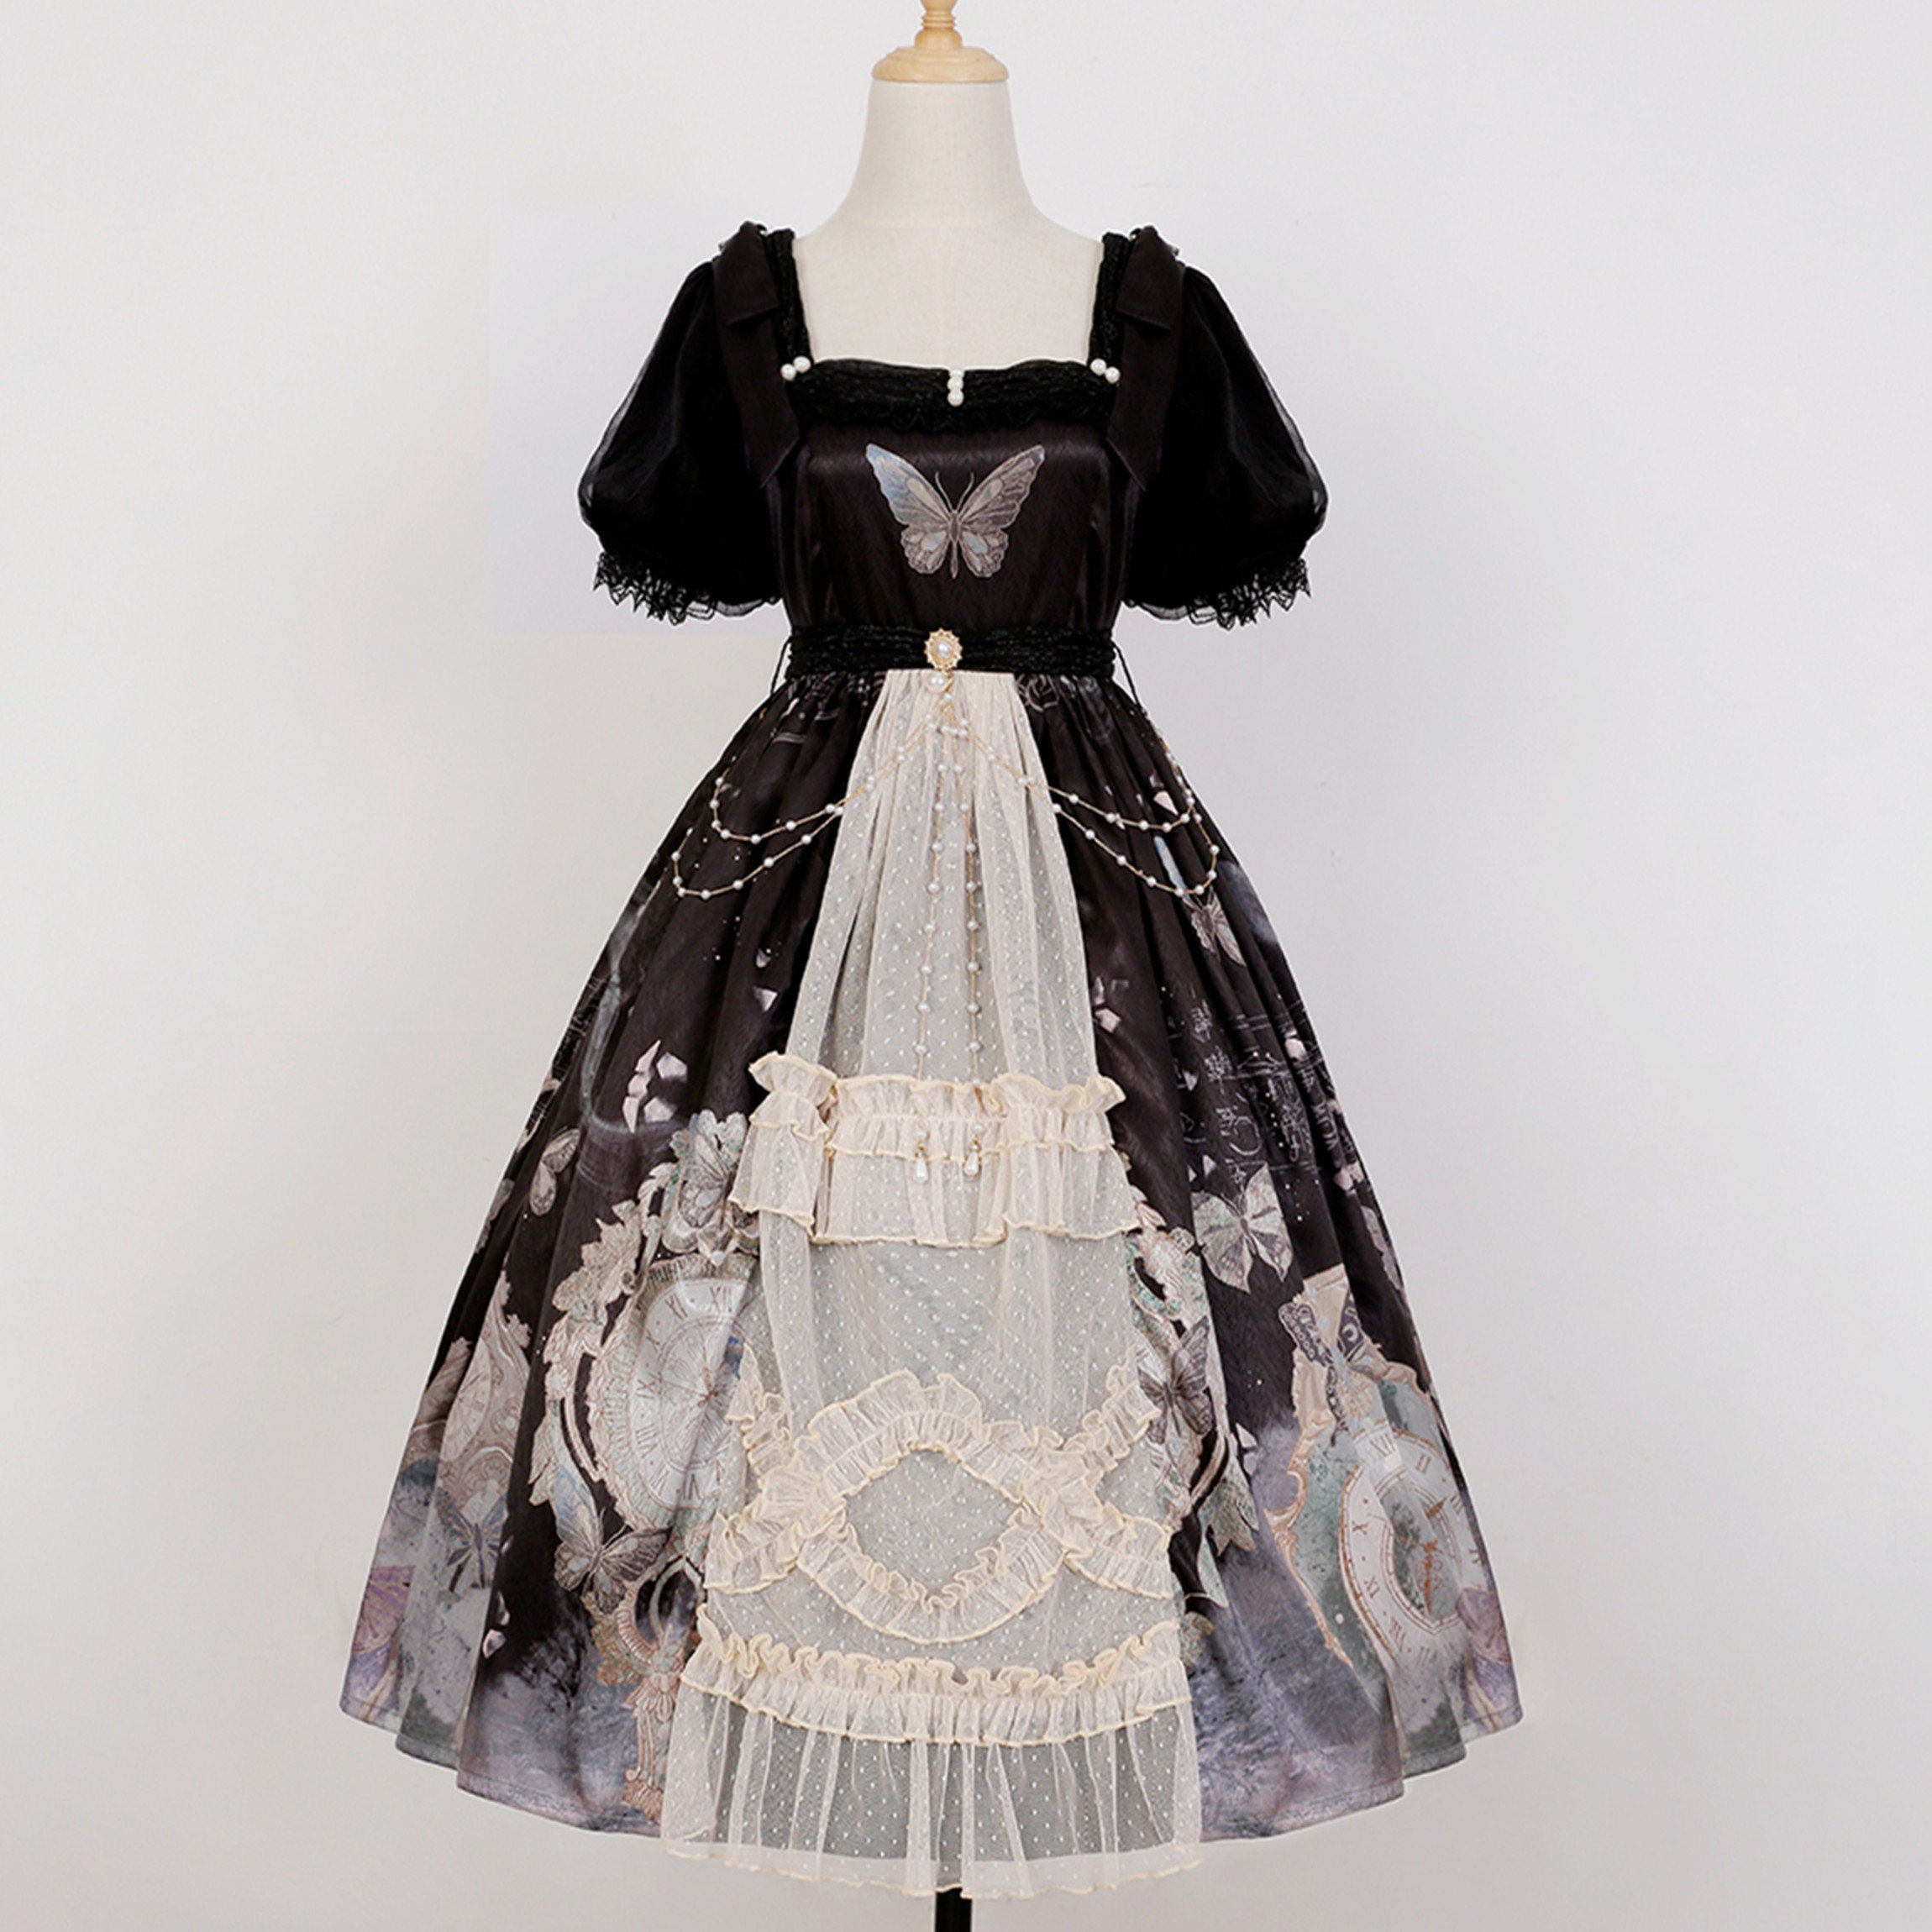 Elegant Black Gothic Lace Dress - Embrace Your Dark Side